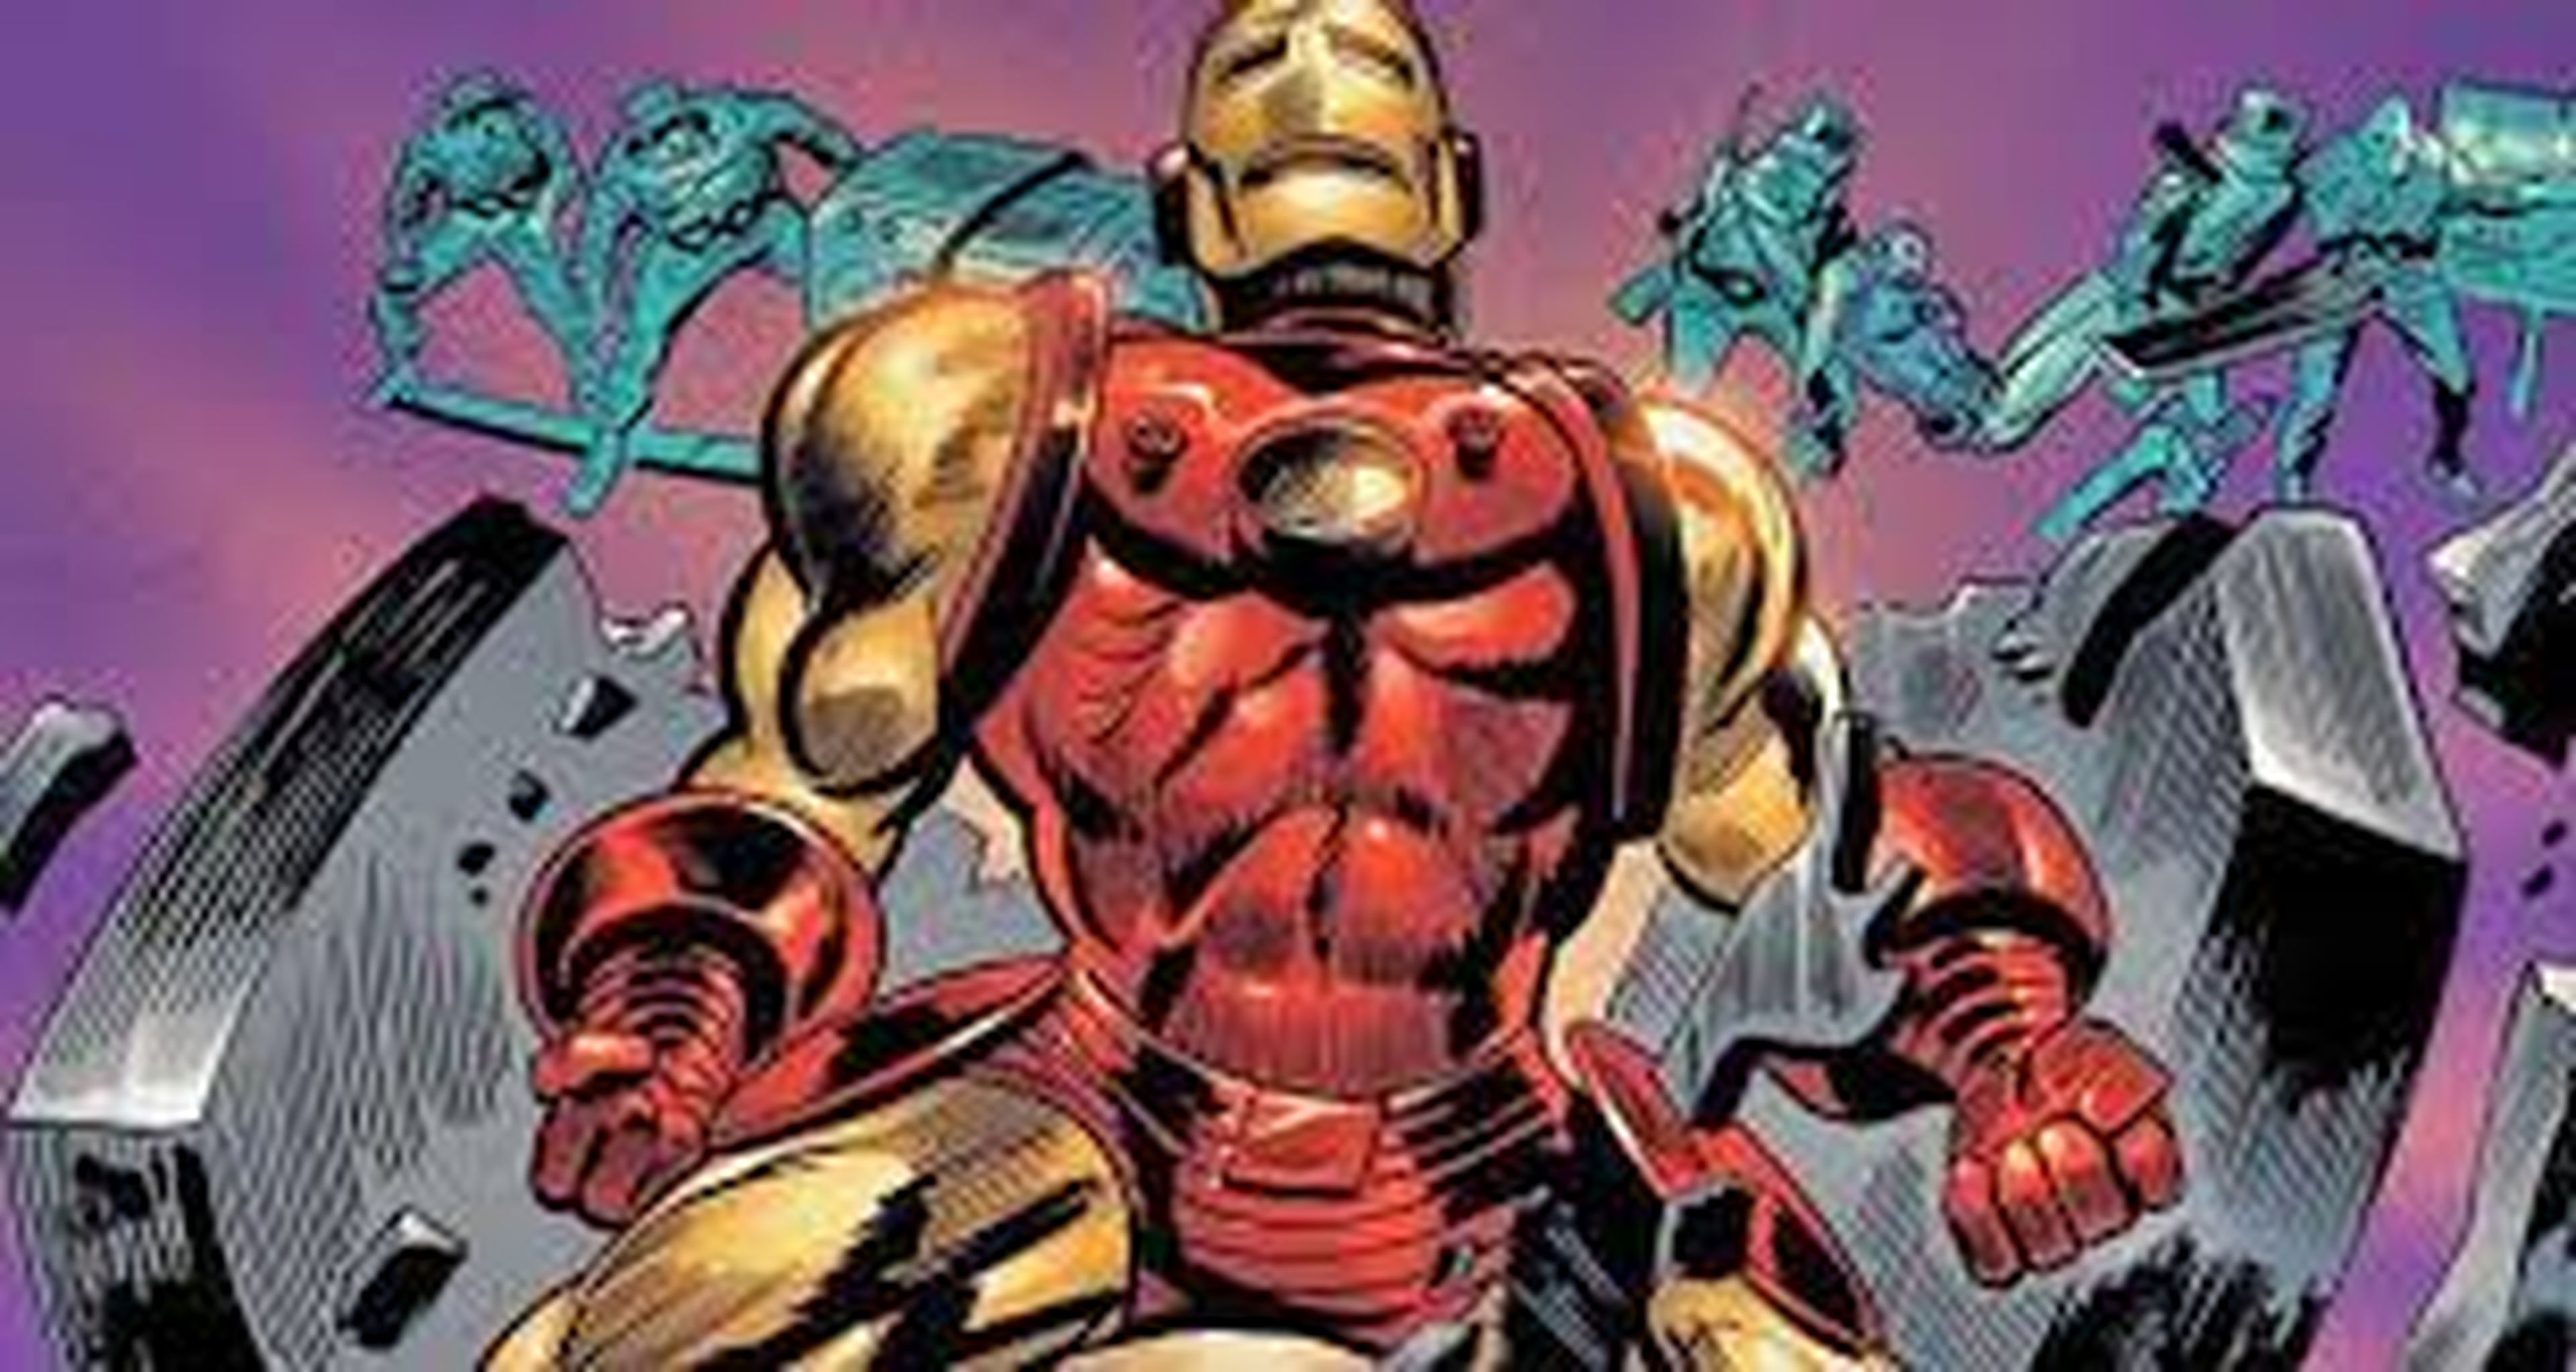 6. Tony Stark / Iron Man